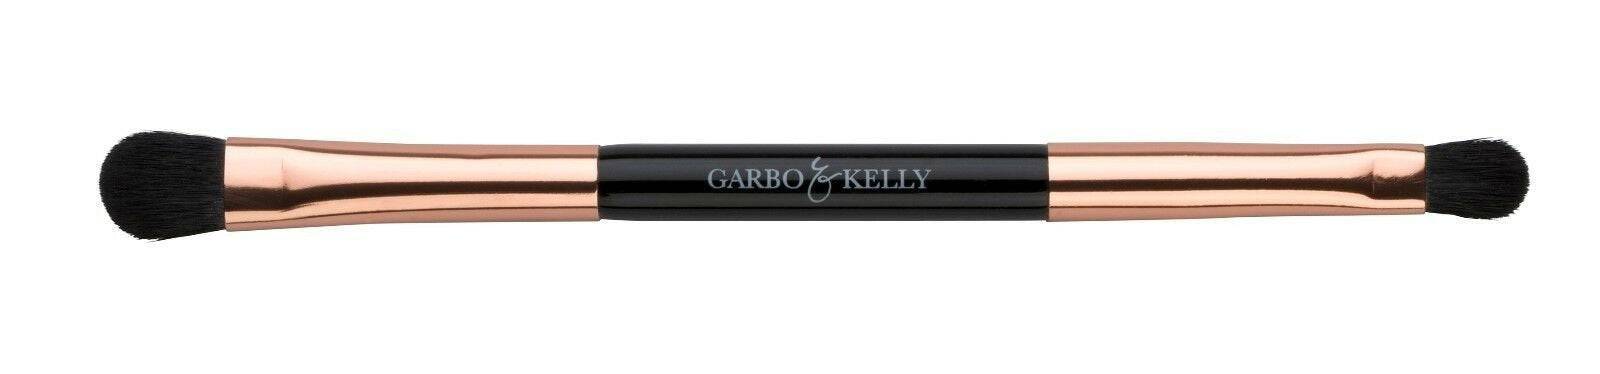 Garbo & Kelly Dual ended eye shadow Brush x 1 - On Line Hair Depot